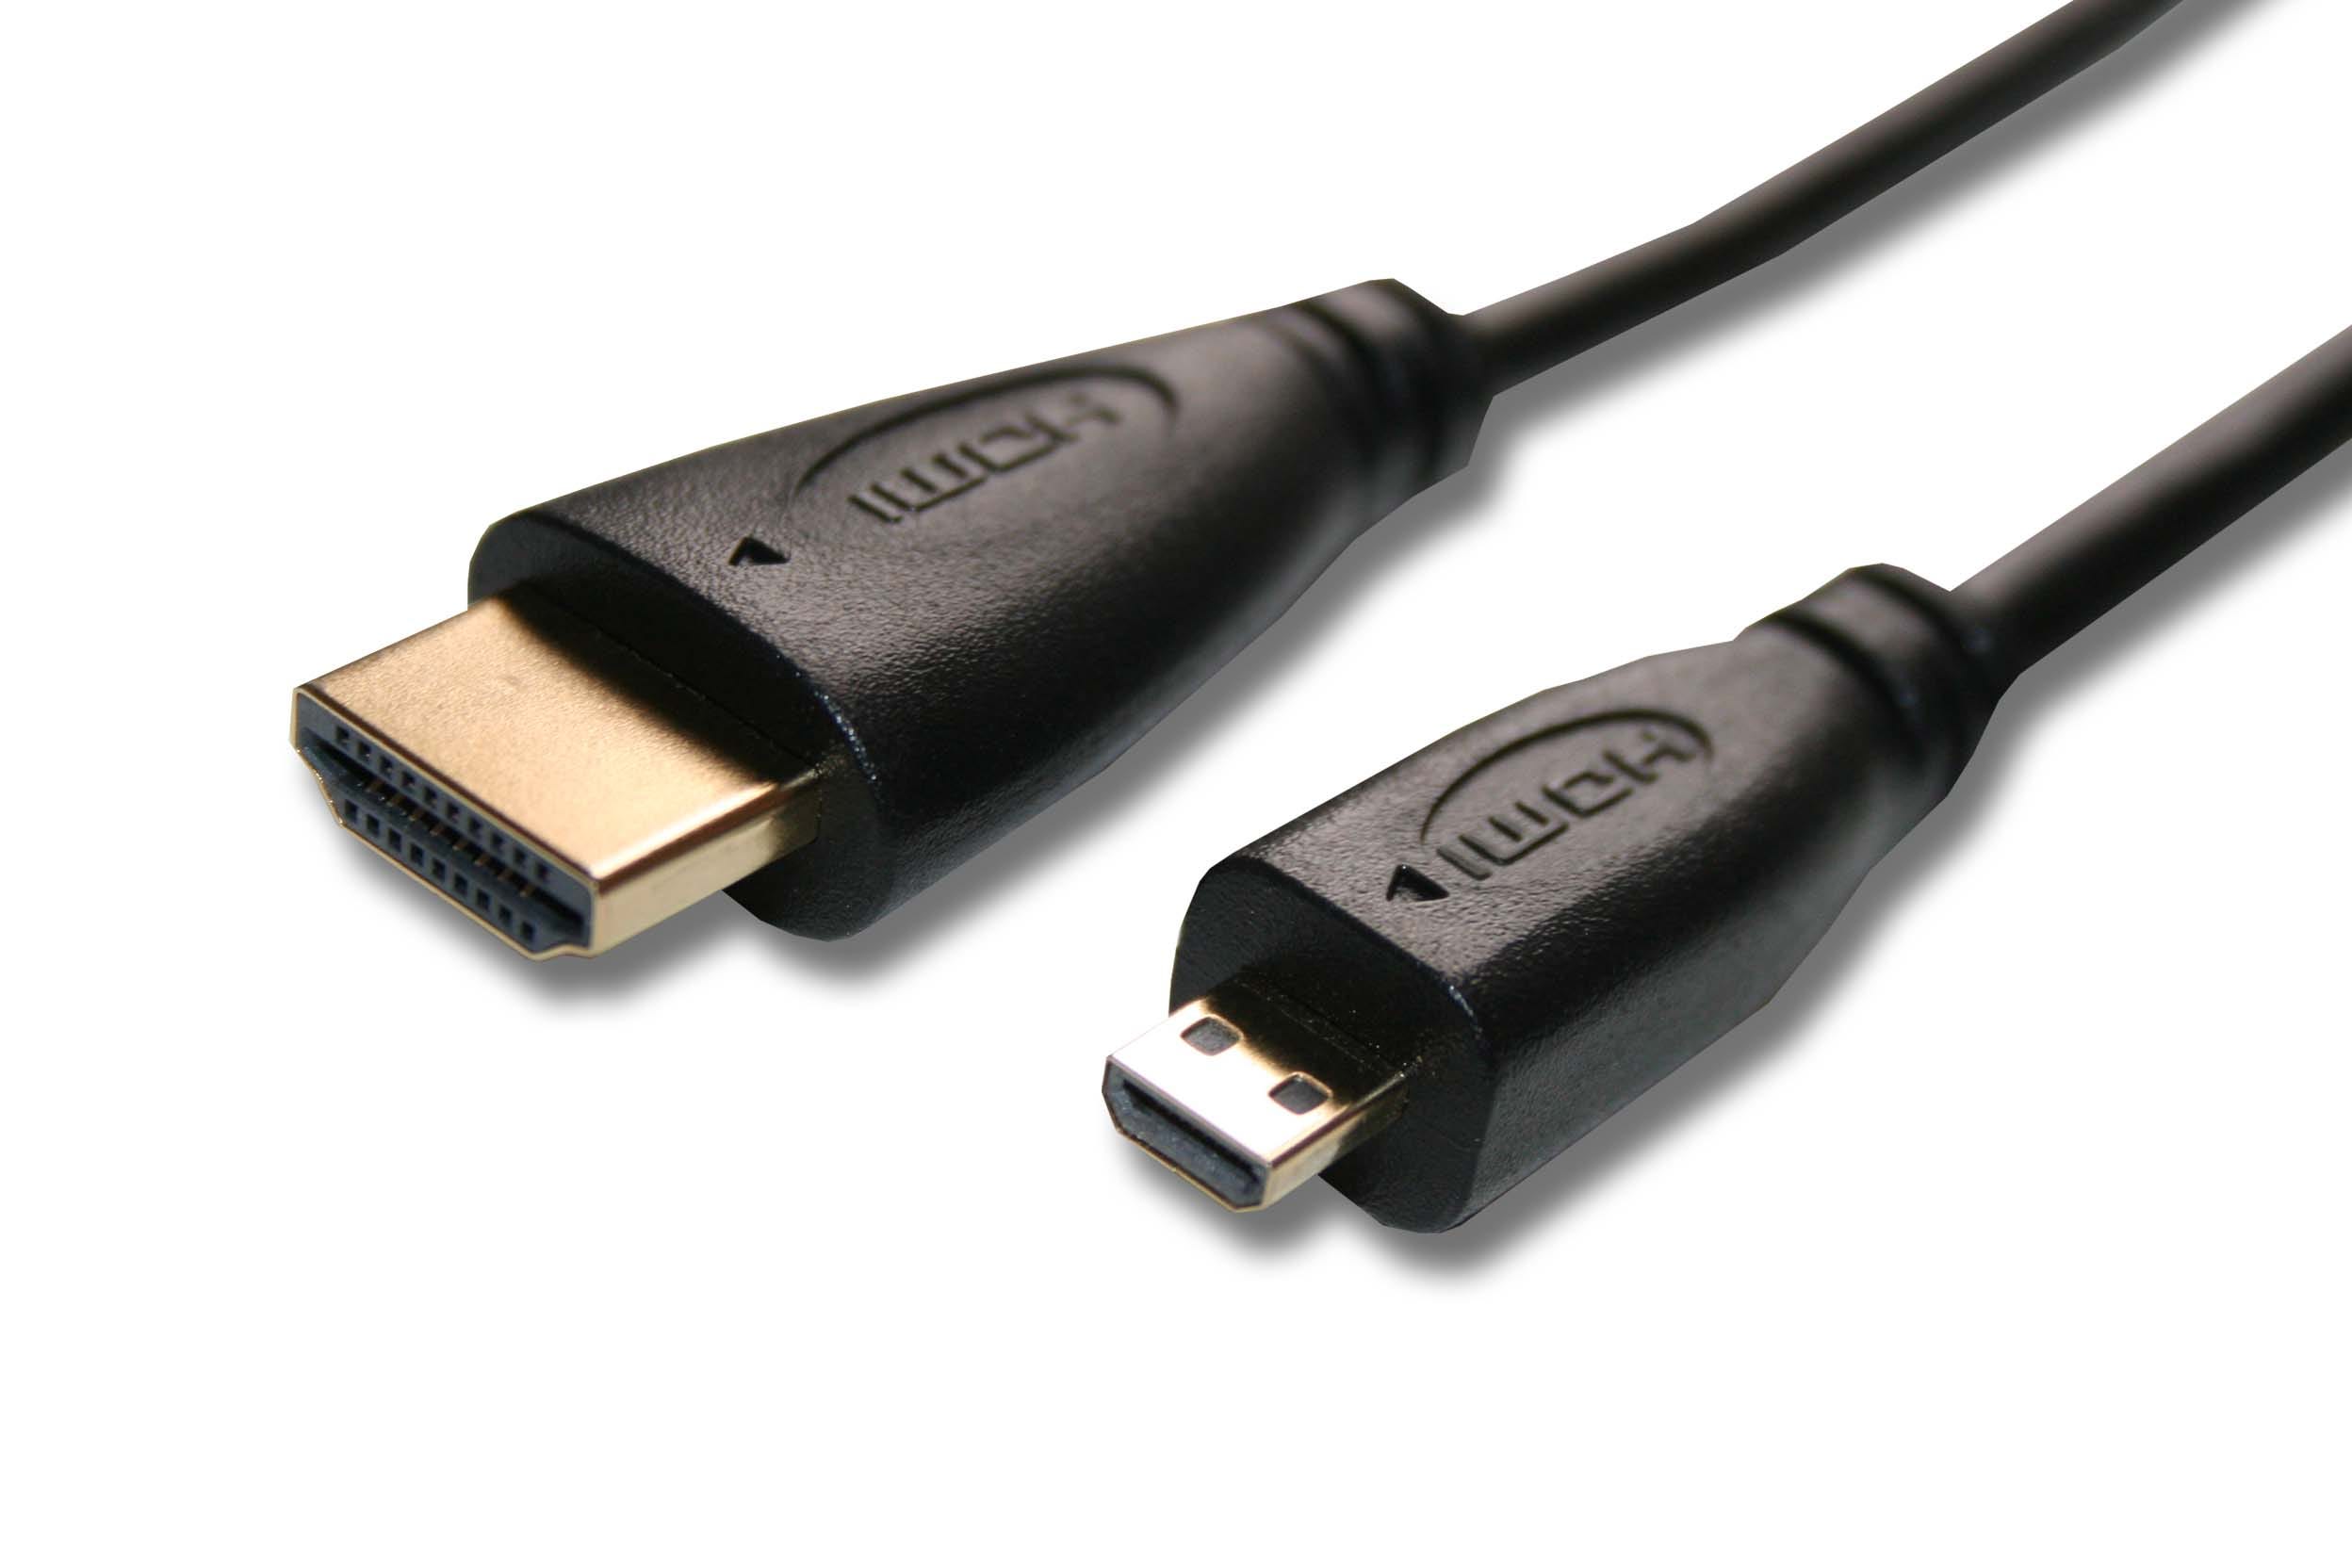 Vhbw câble HDMI, Micro HDMI à HDMI 1.4 pour Tablette, Smartphone